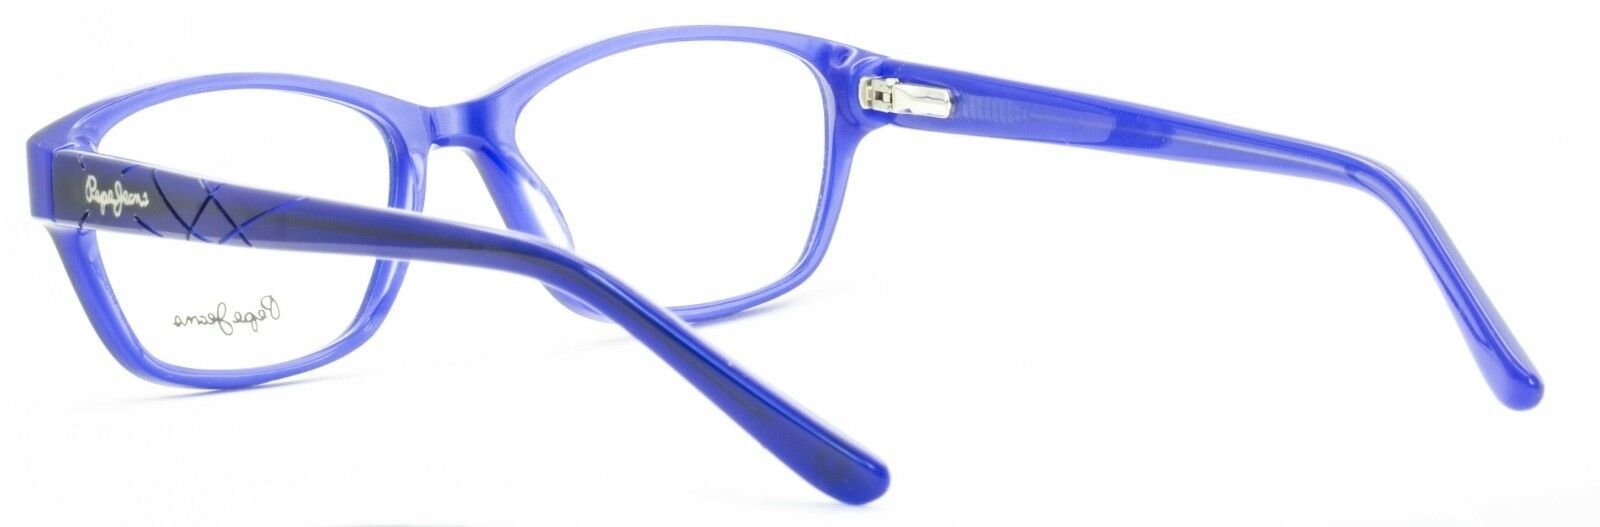 PEPE JEANS PJ3116 col C4 Eyewear FRAMES NEW Glasses Eyeglasses RX OpticalTRUSTED